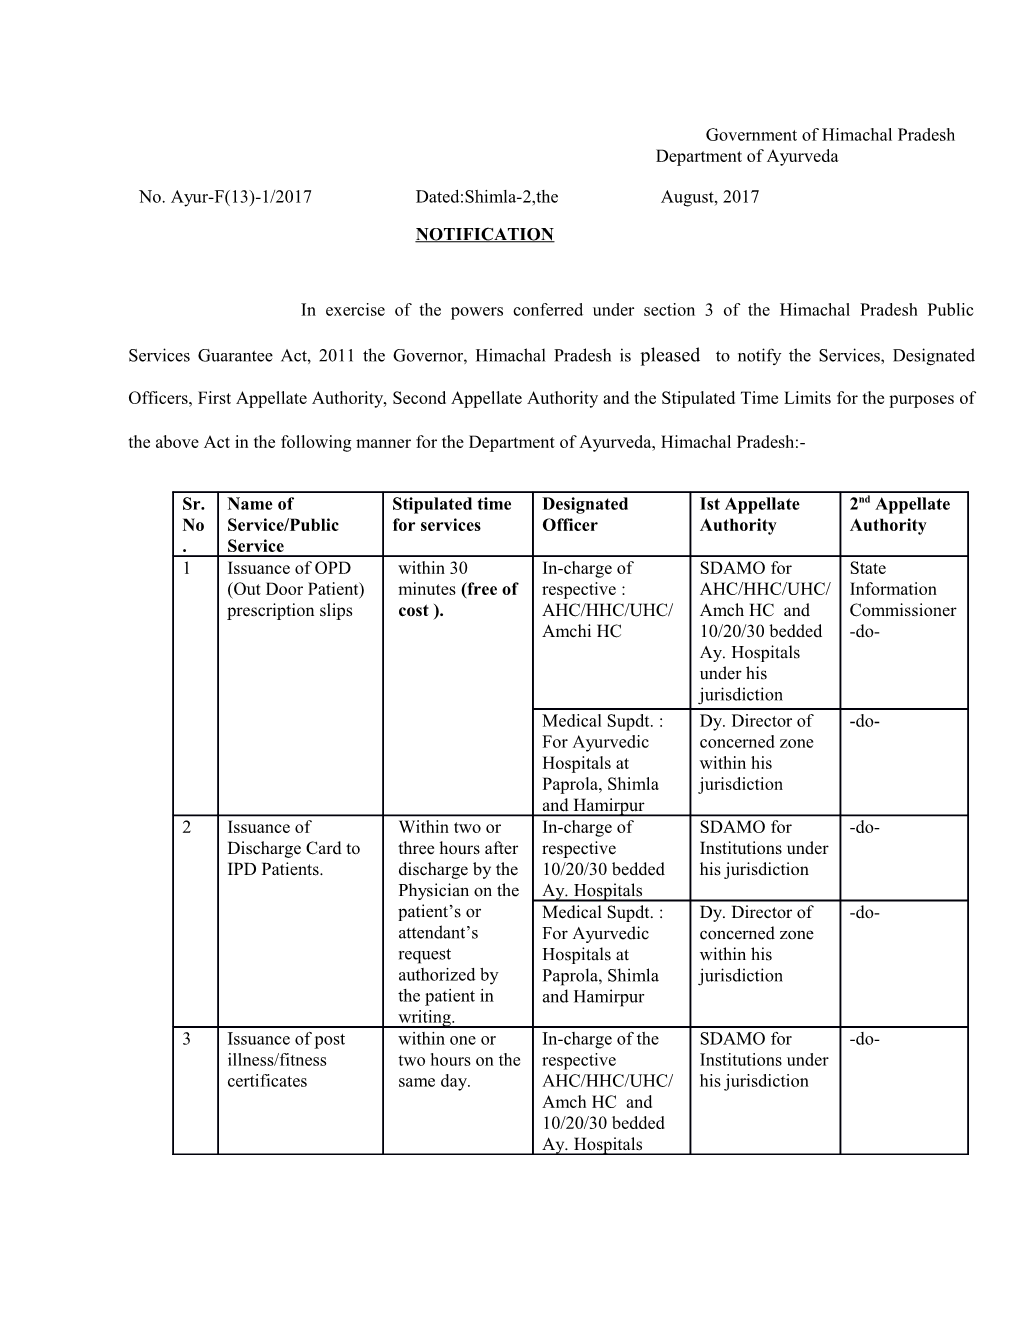 Government of Himachal Pradesh Department of Ayurveda